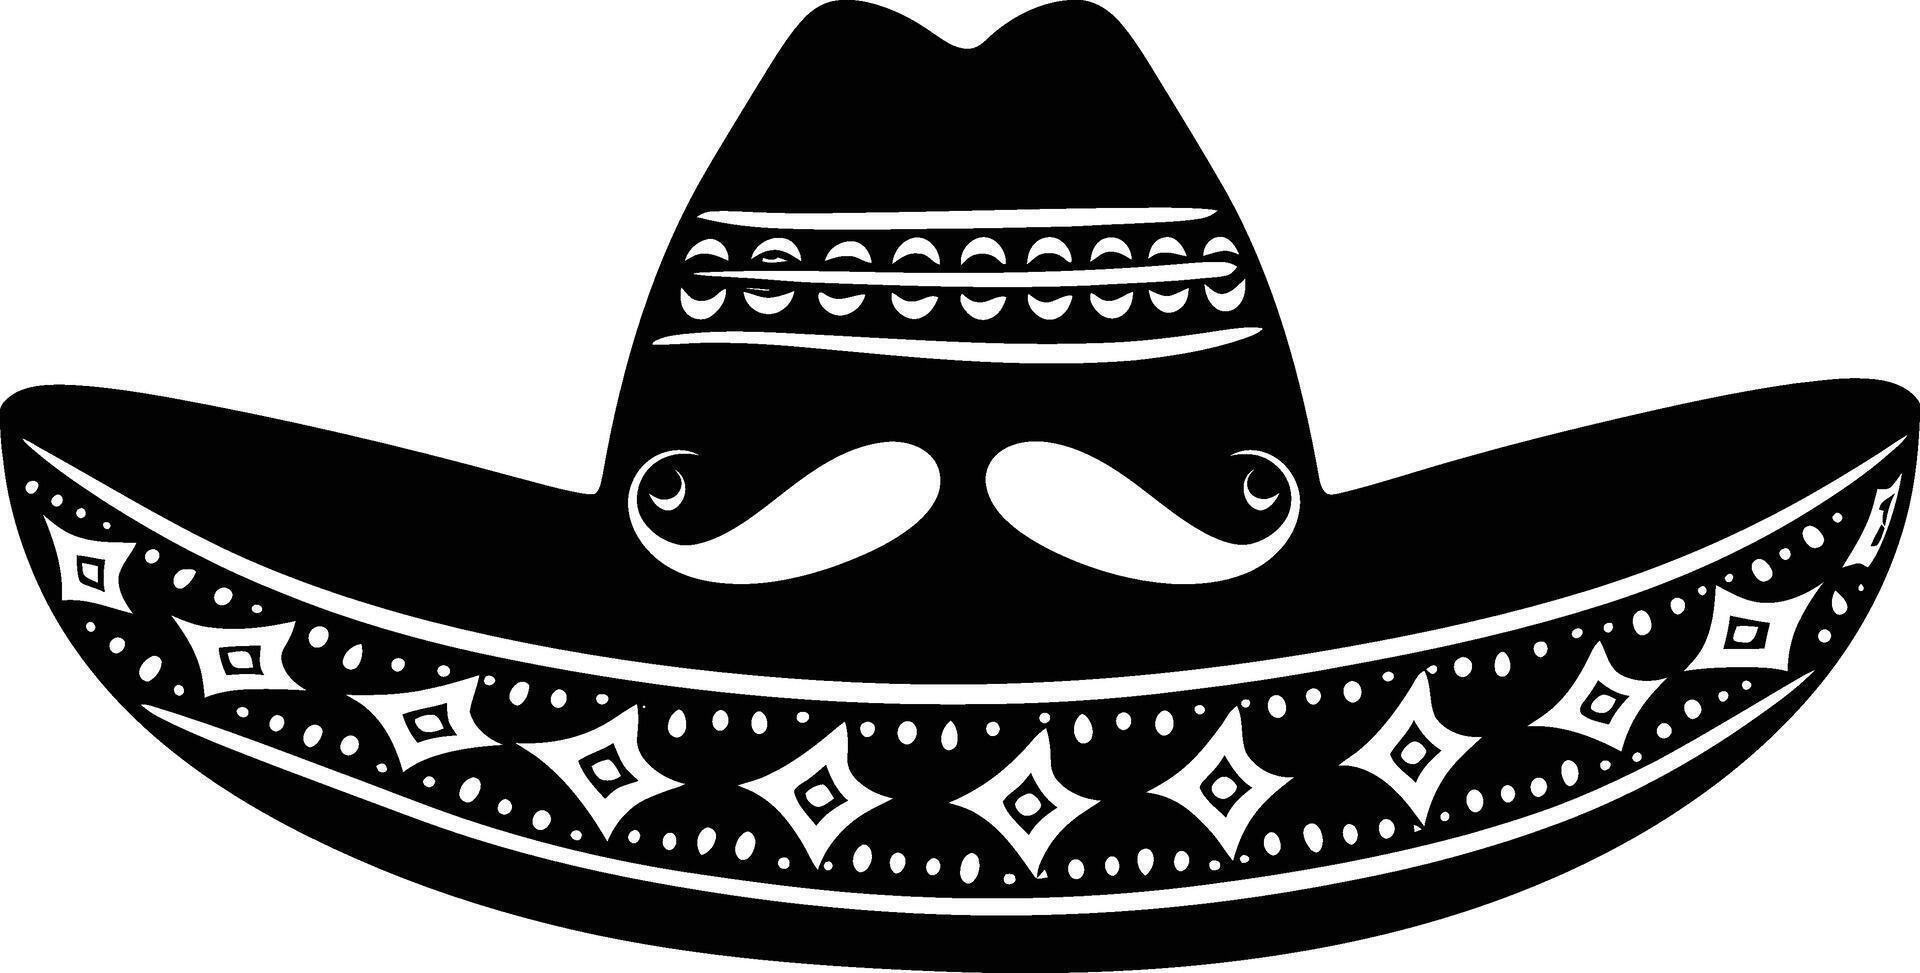 ai gerado silhueta mexicano chapéu sombrero com bigode Preto cor só vetor